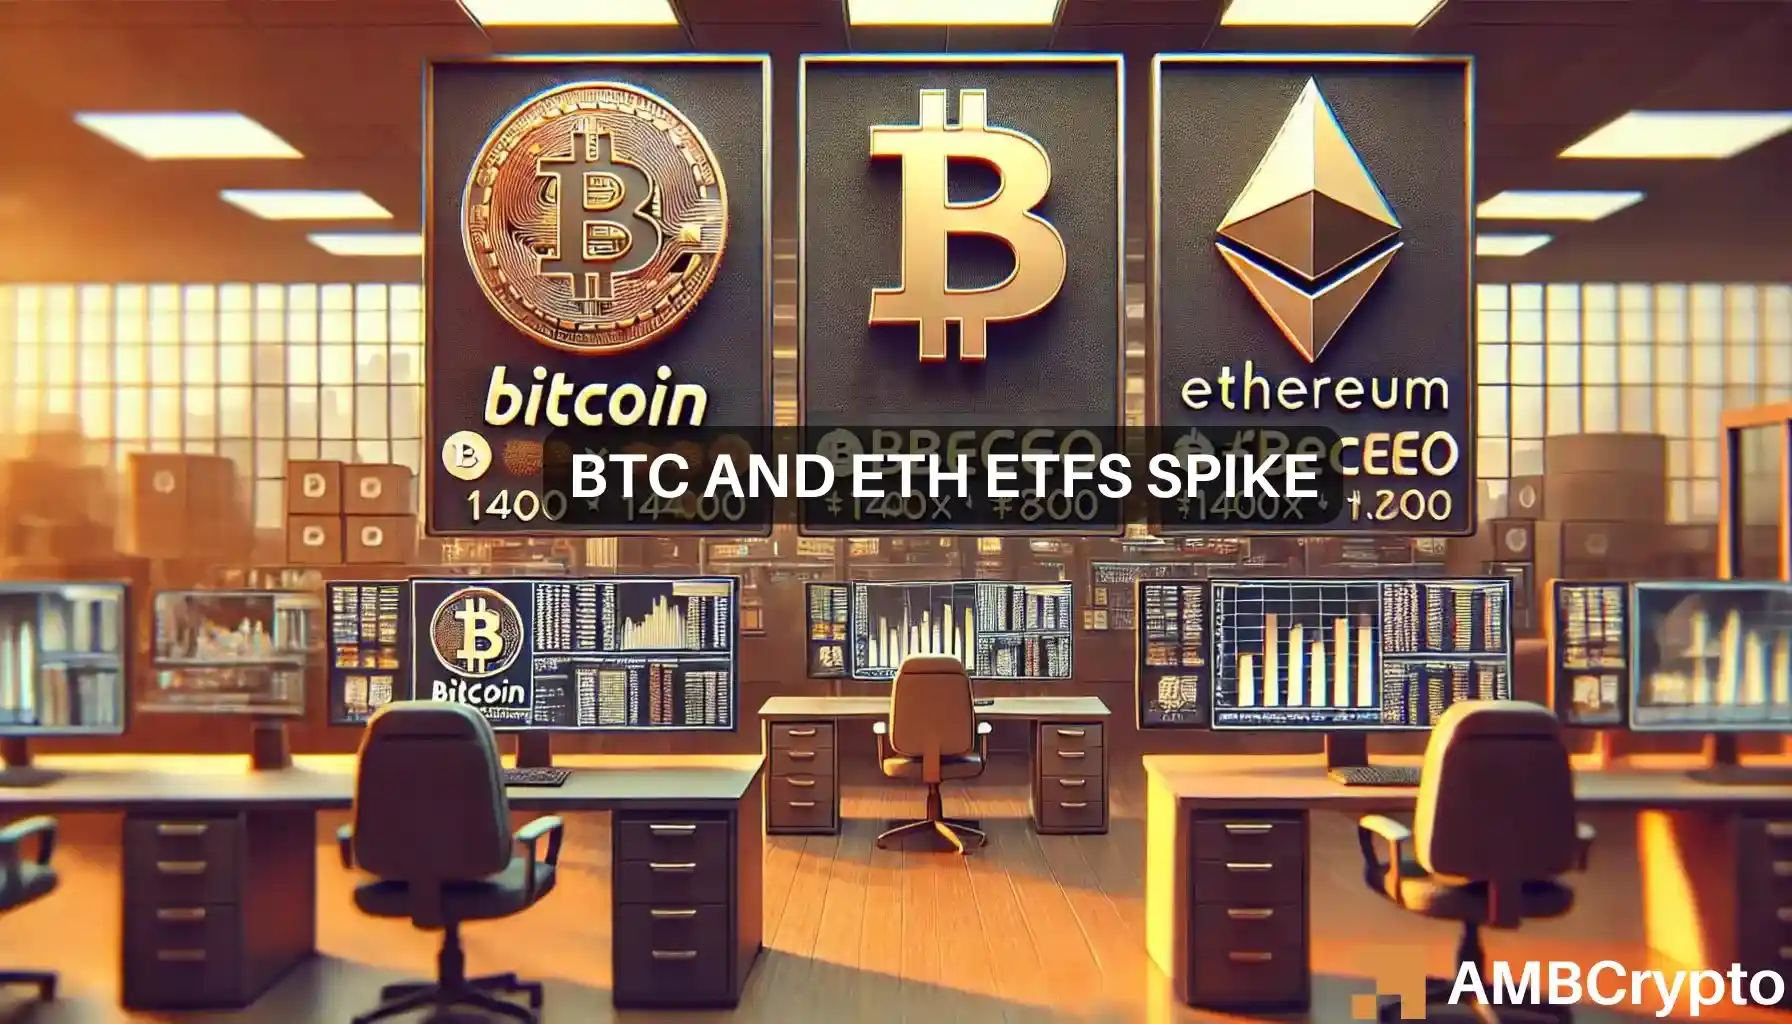 Why Bitcoin, Ethereum ETF volumes surged despite the crypto slump